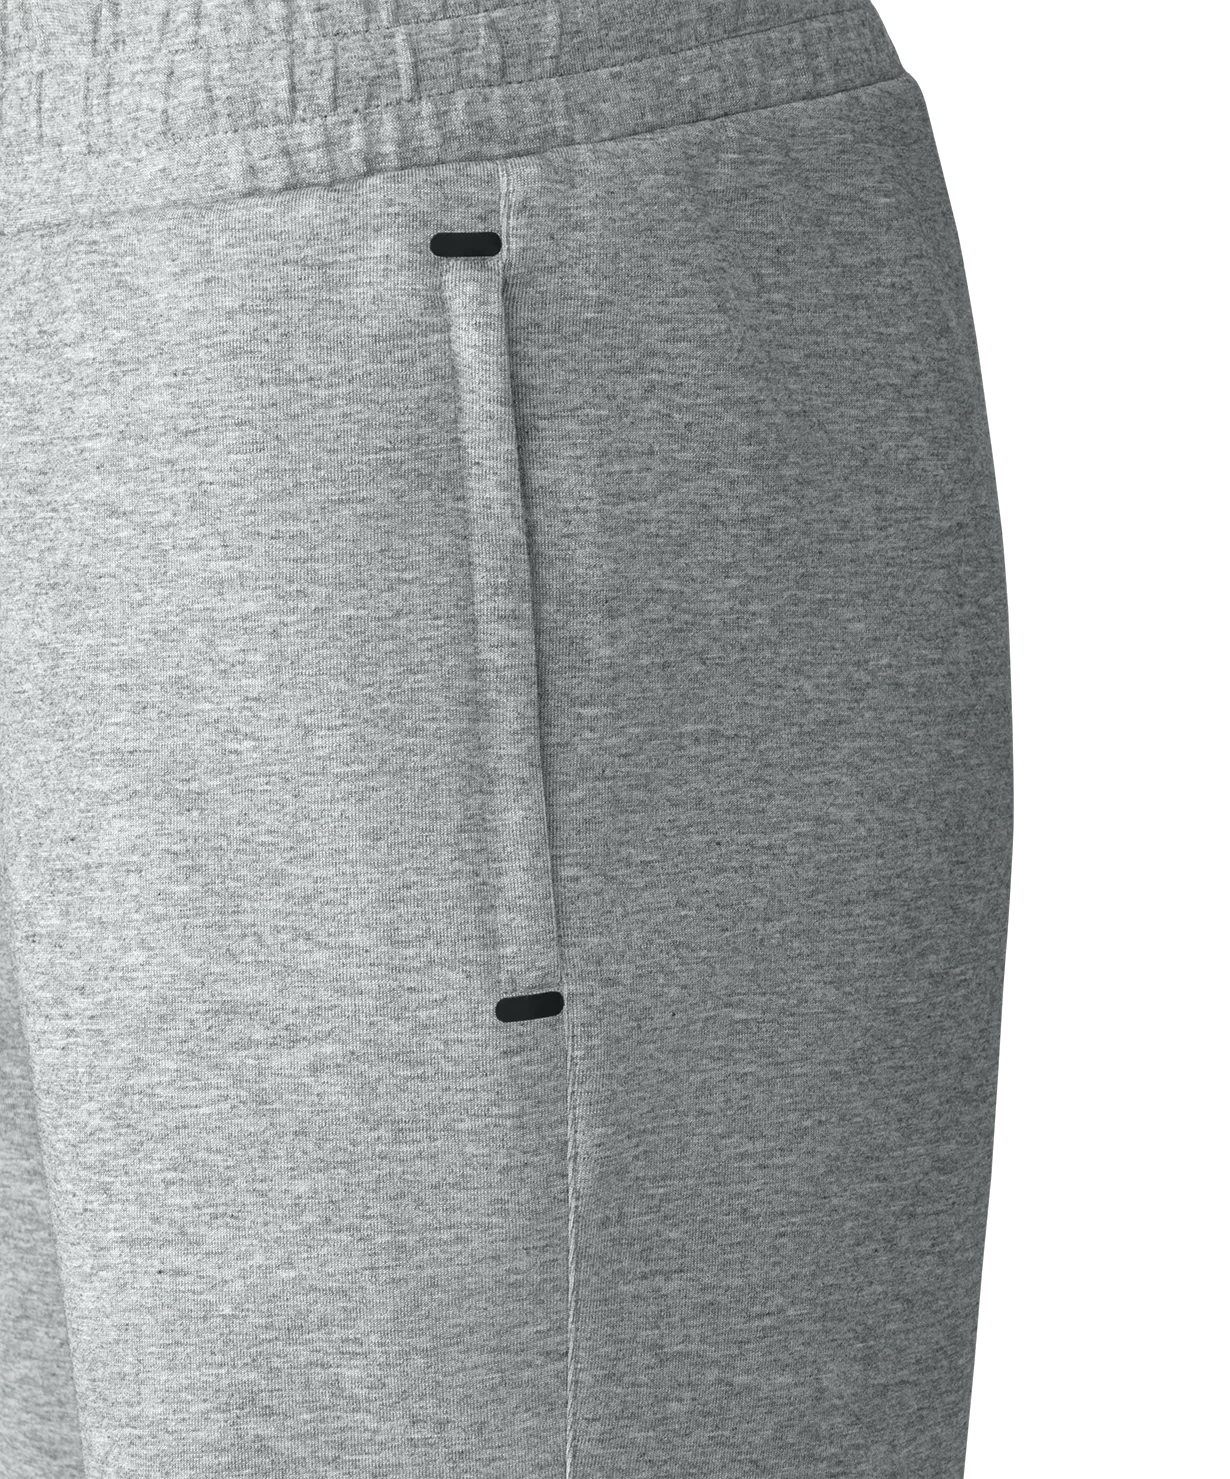 Фото Шорты ESSENTIAL Athlete Shorts, серый со склада магазина СпортСЕ